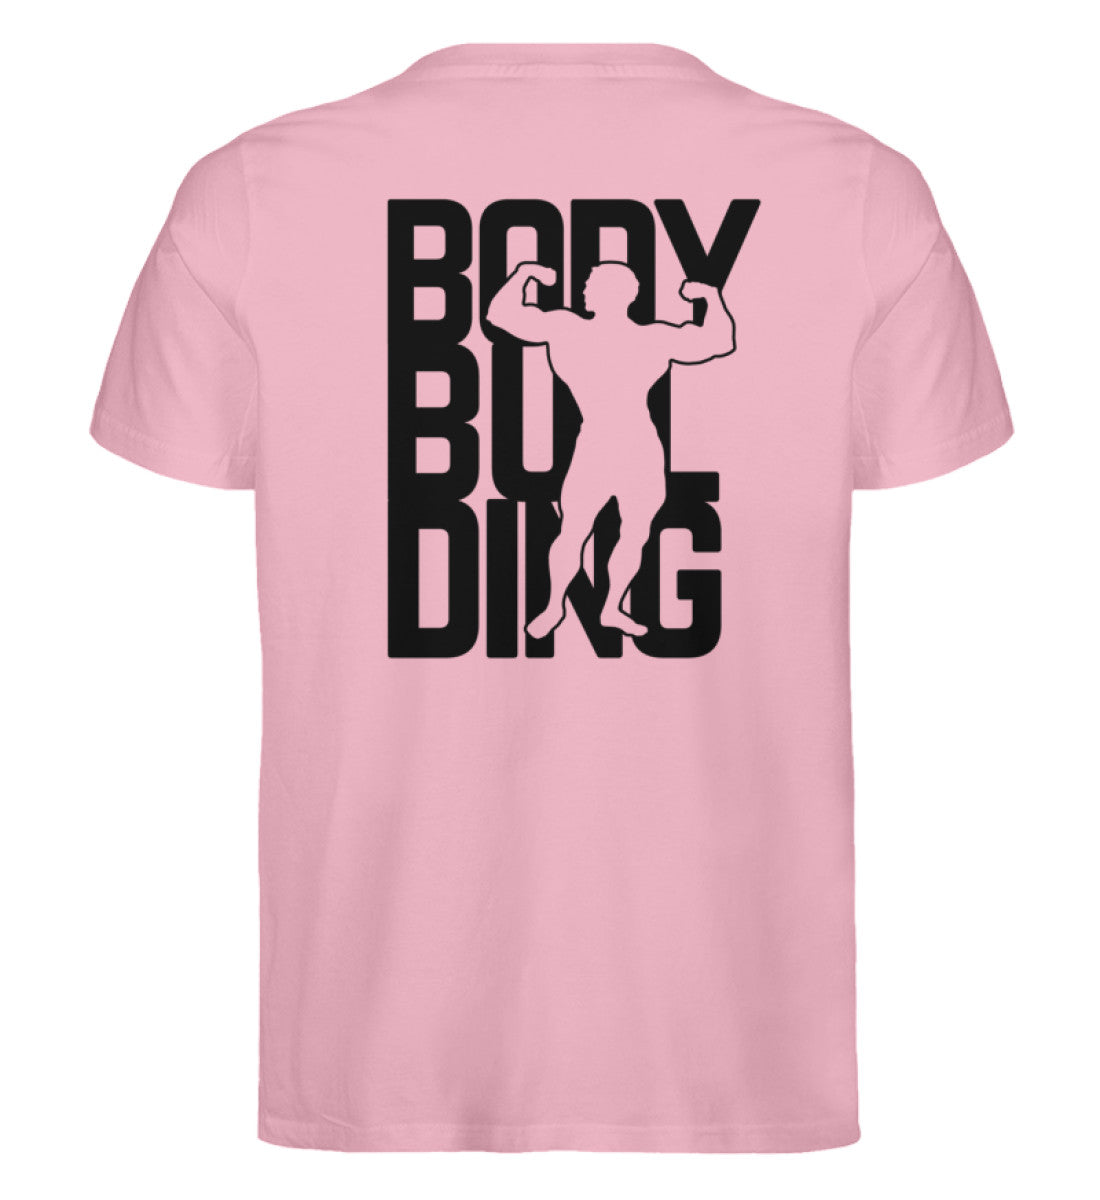 Organic Unisex T-Shirt "BODYBUILDING" Cotton Pink